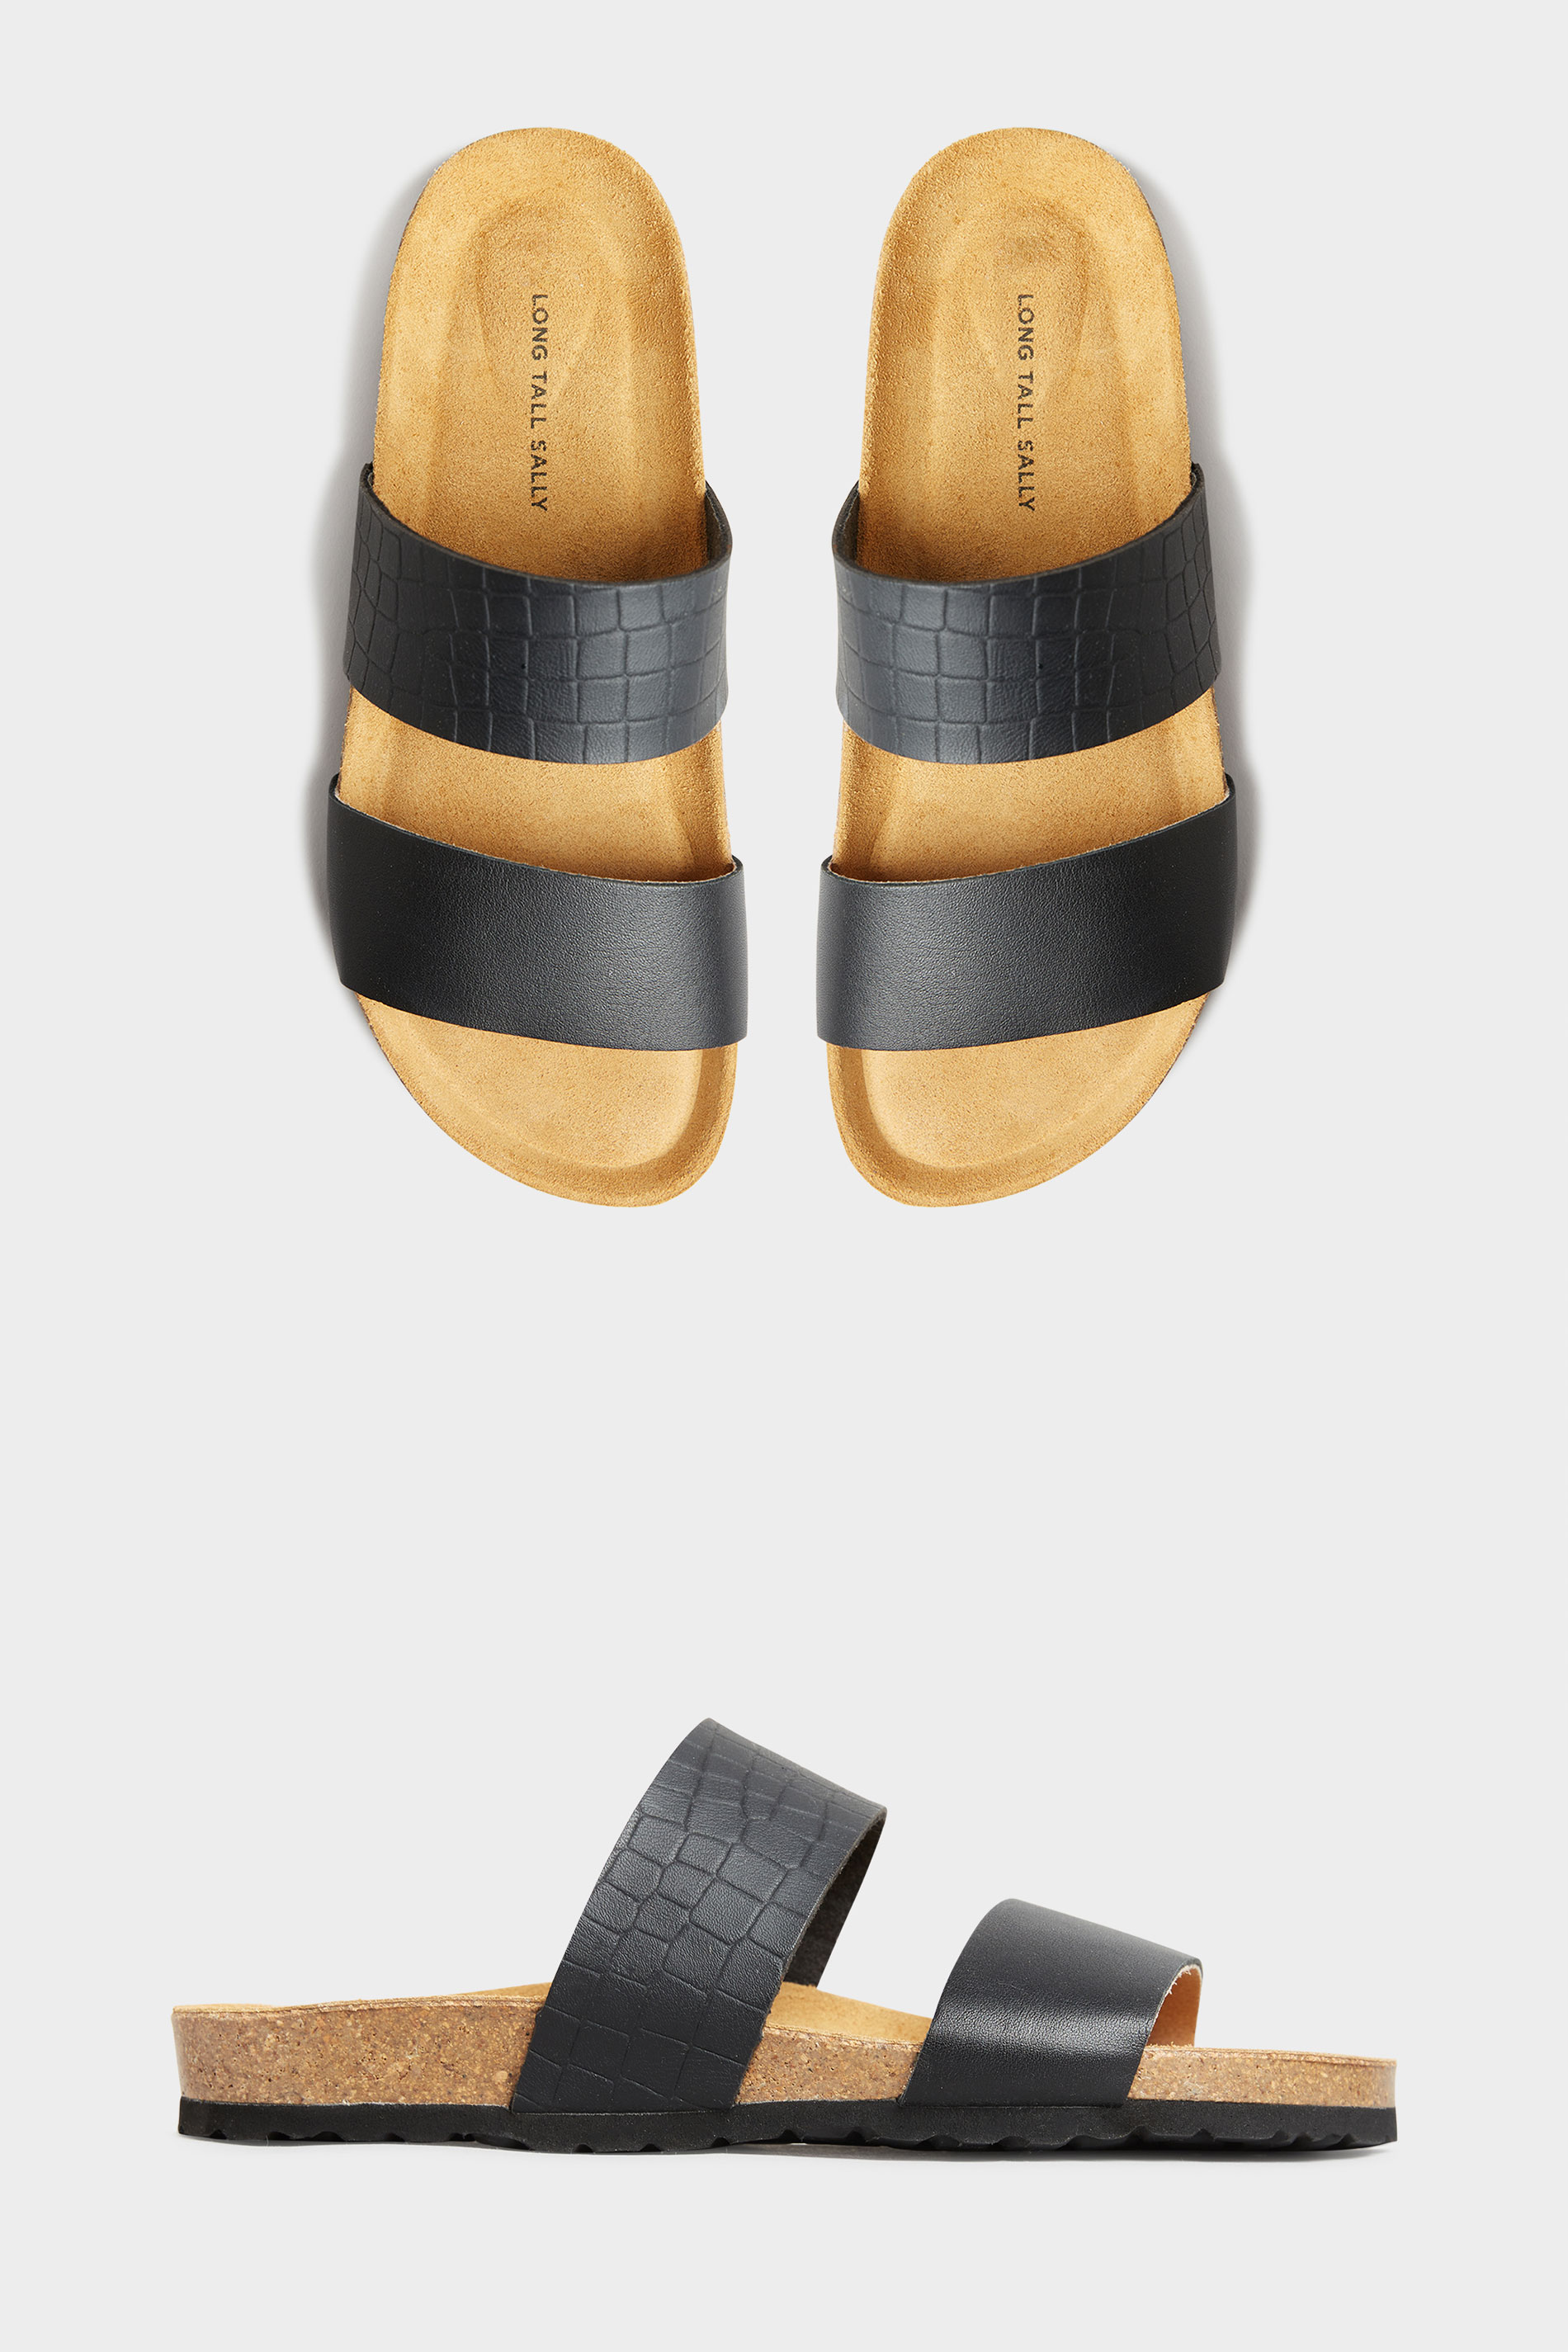 Grande taille  Sandals Grande taille  Flat Sandals | LTS Black Leather Two Strap Footbed Sandals In Standard D Fit - BQ94971